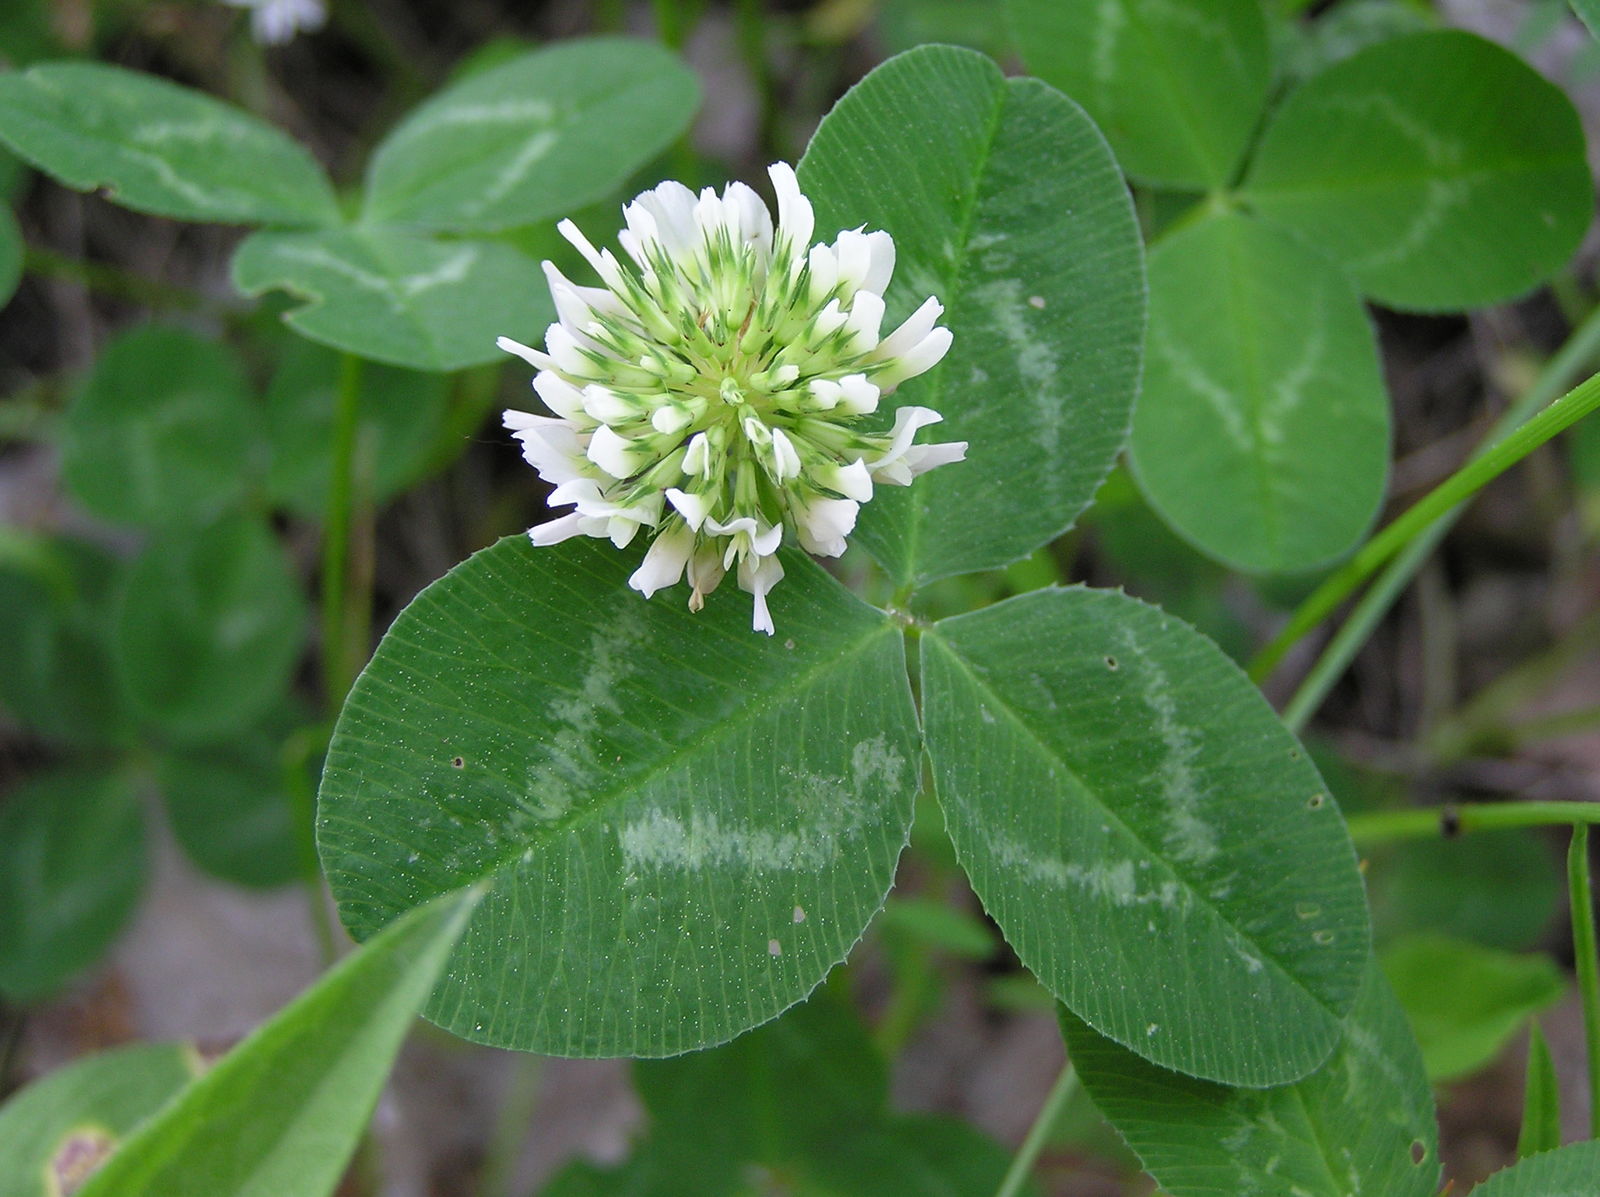 Flowering Weeds: Clovers (Trifolium)